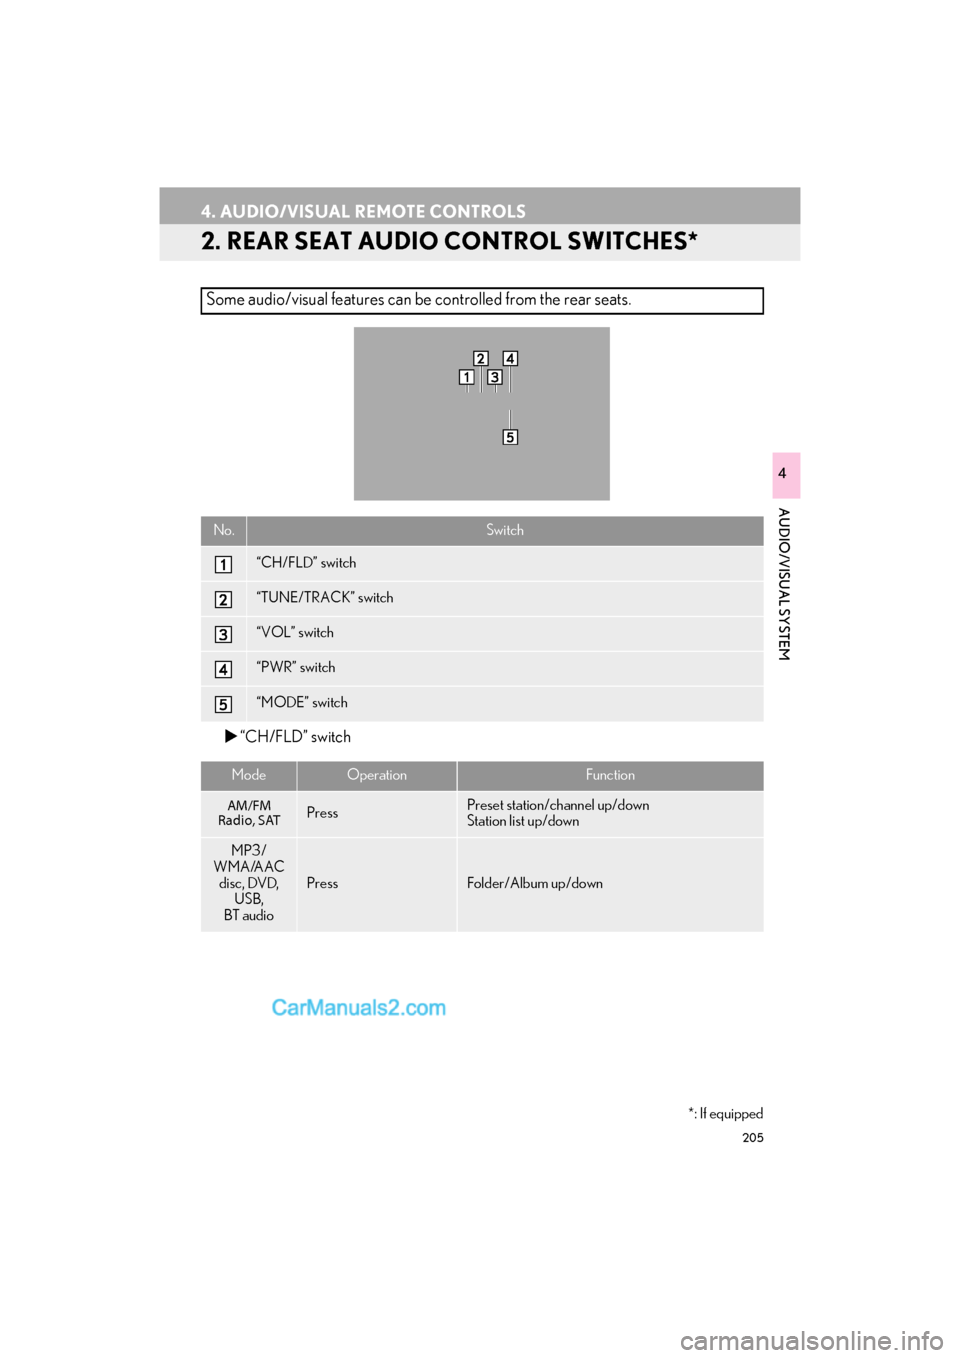 Lexus GS F 2016  Navigation Manual 205
4. AUDIO/VISUAL REMOTE CONTROLS
GS_Navi+MM_OM30F12U_(U)15.09.01     12:20
AUDIO/VISUAL SYSTEM
4
2. REAR SEAT AUDIO CONTROL SWITCHES*
�X“CH/FLD” switch
Some audio/visual features can be control